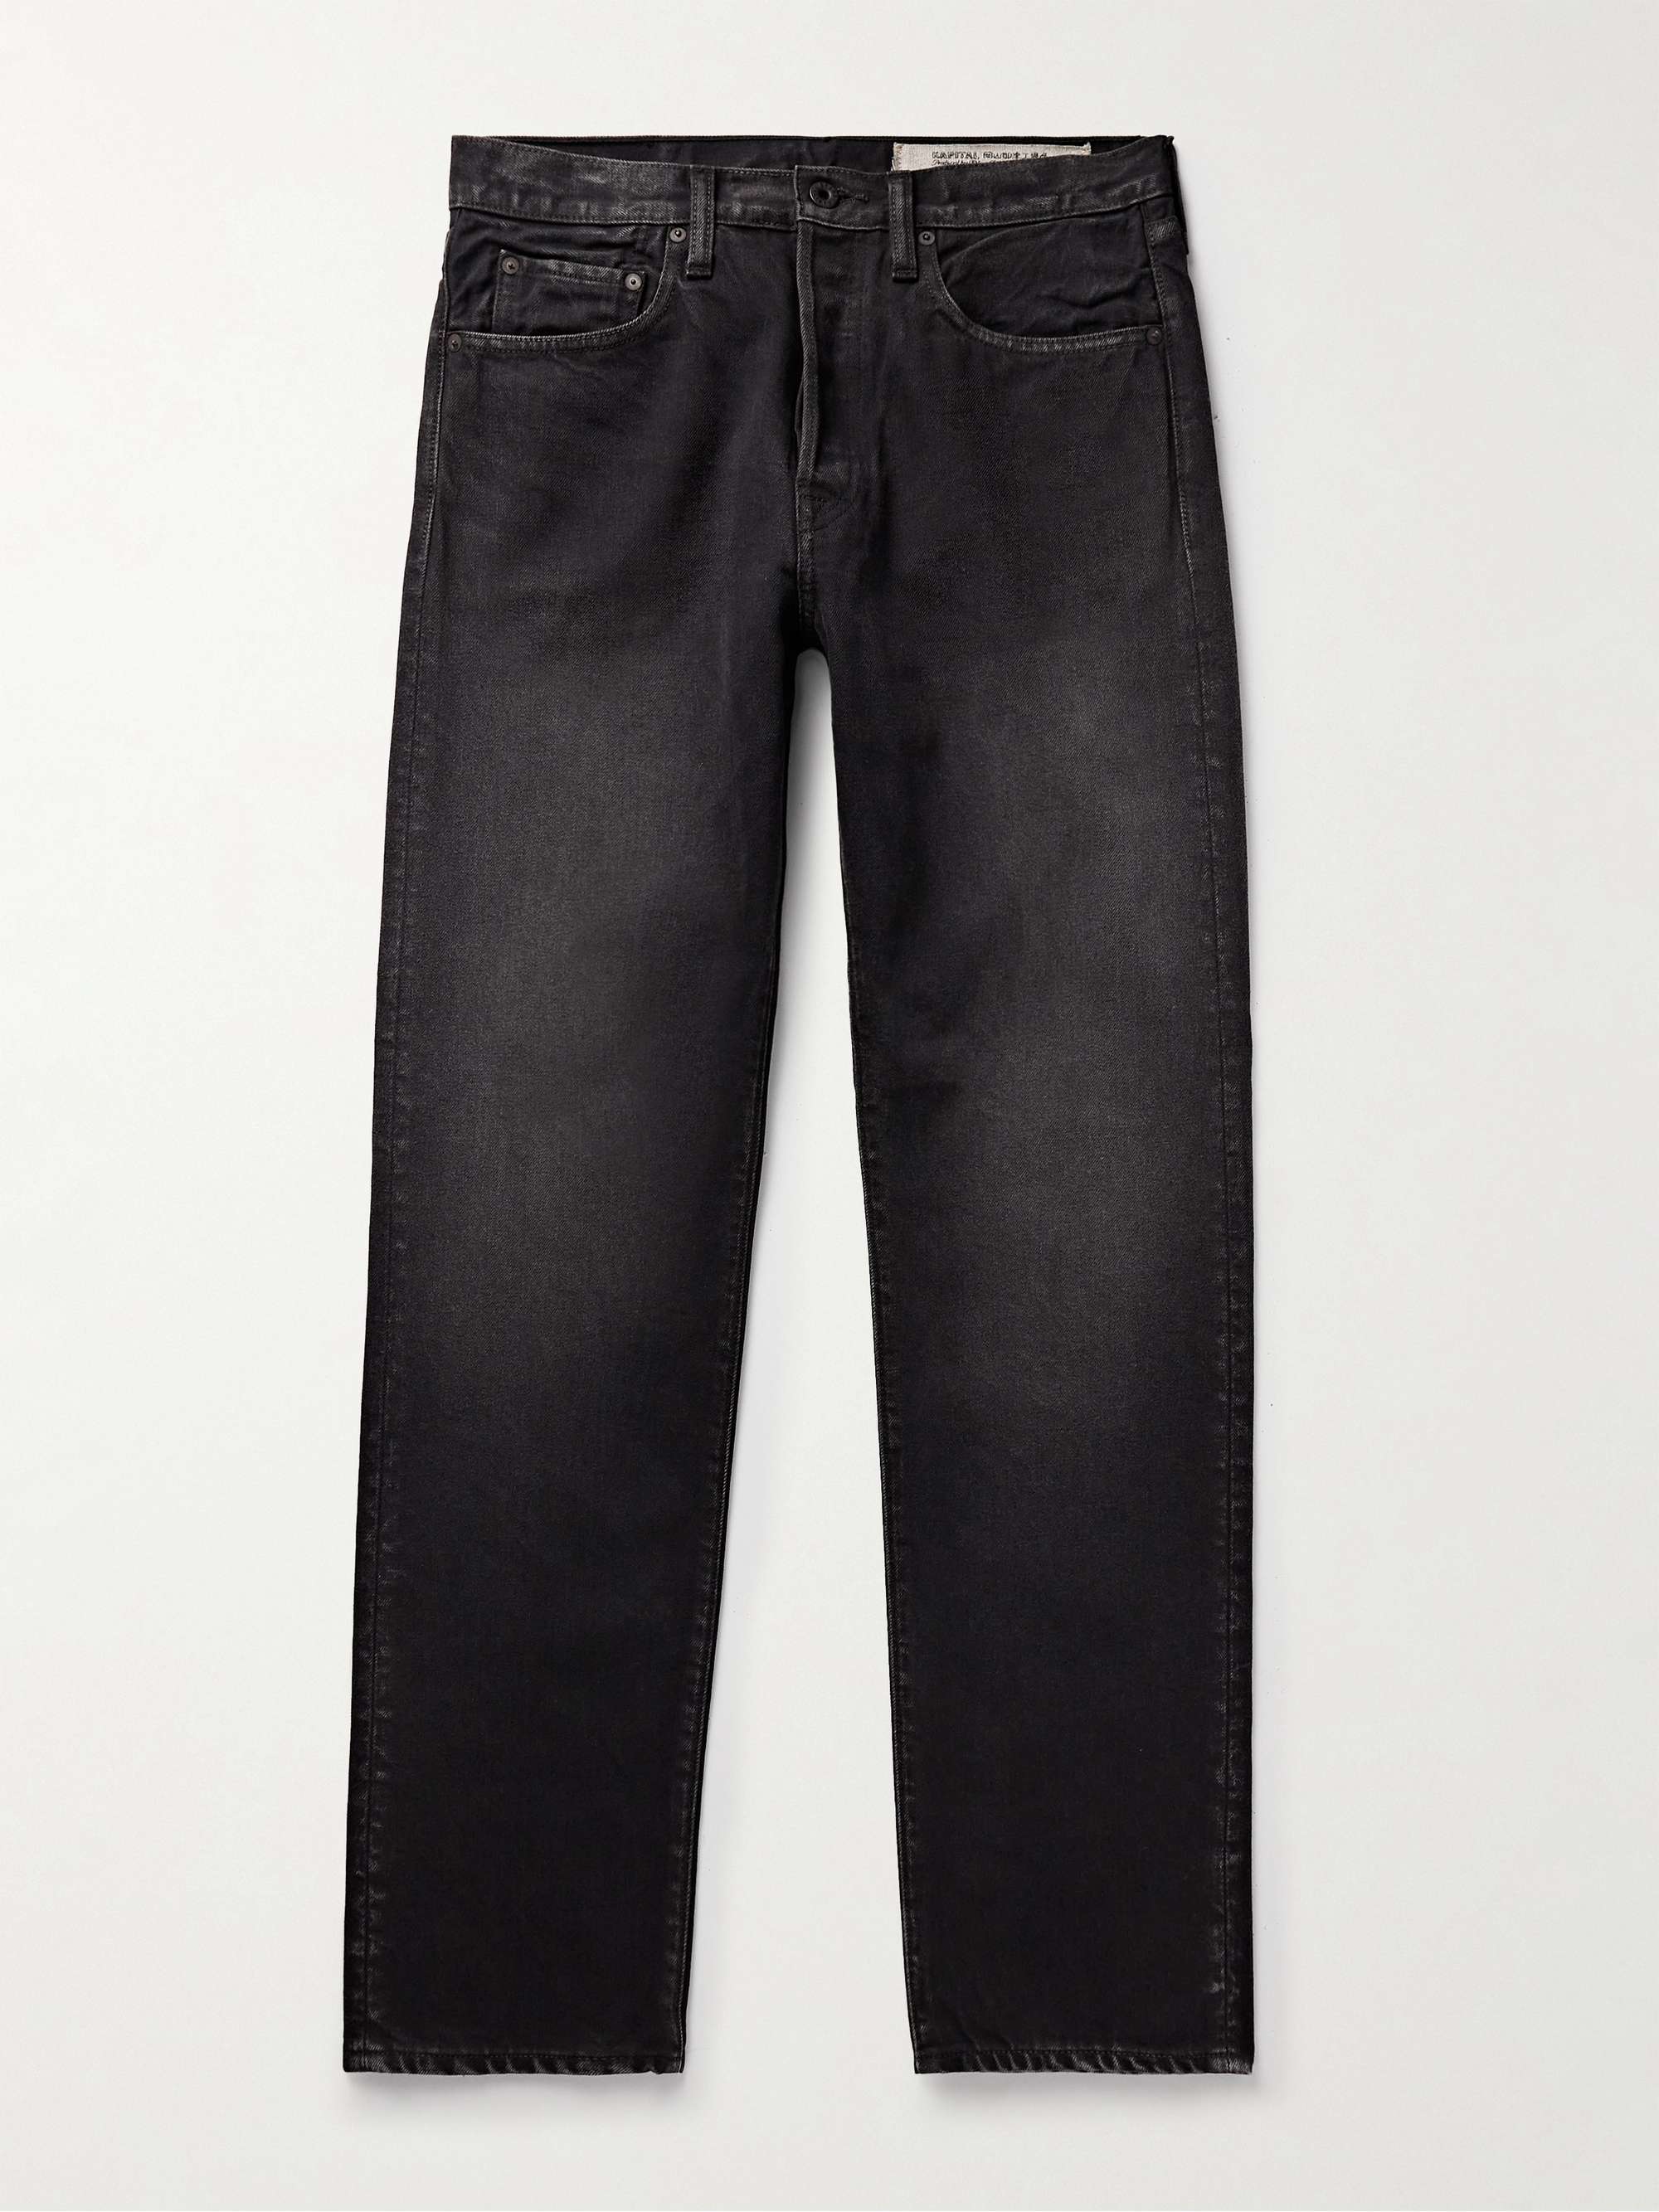 KAPITAL Slim-Fit Straight-Leg Stone-Washed Jeans for Men | MR PORTER